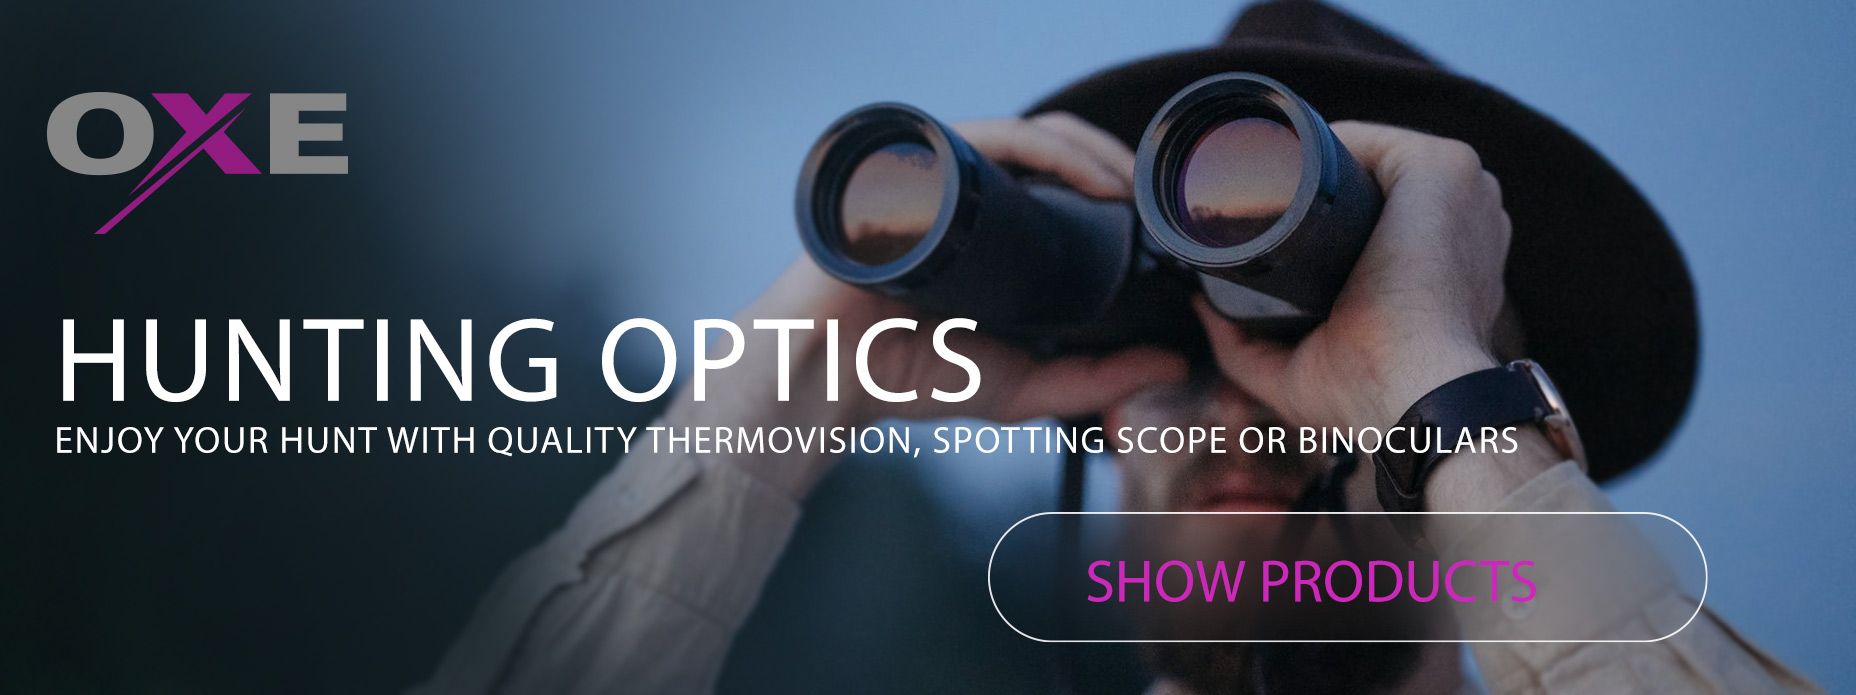 OXE Hunting optics